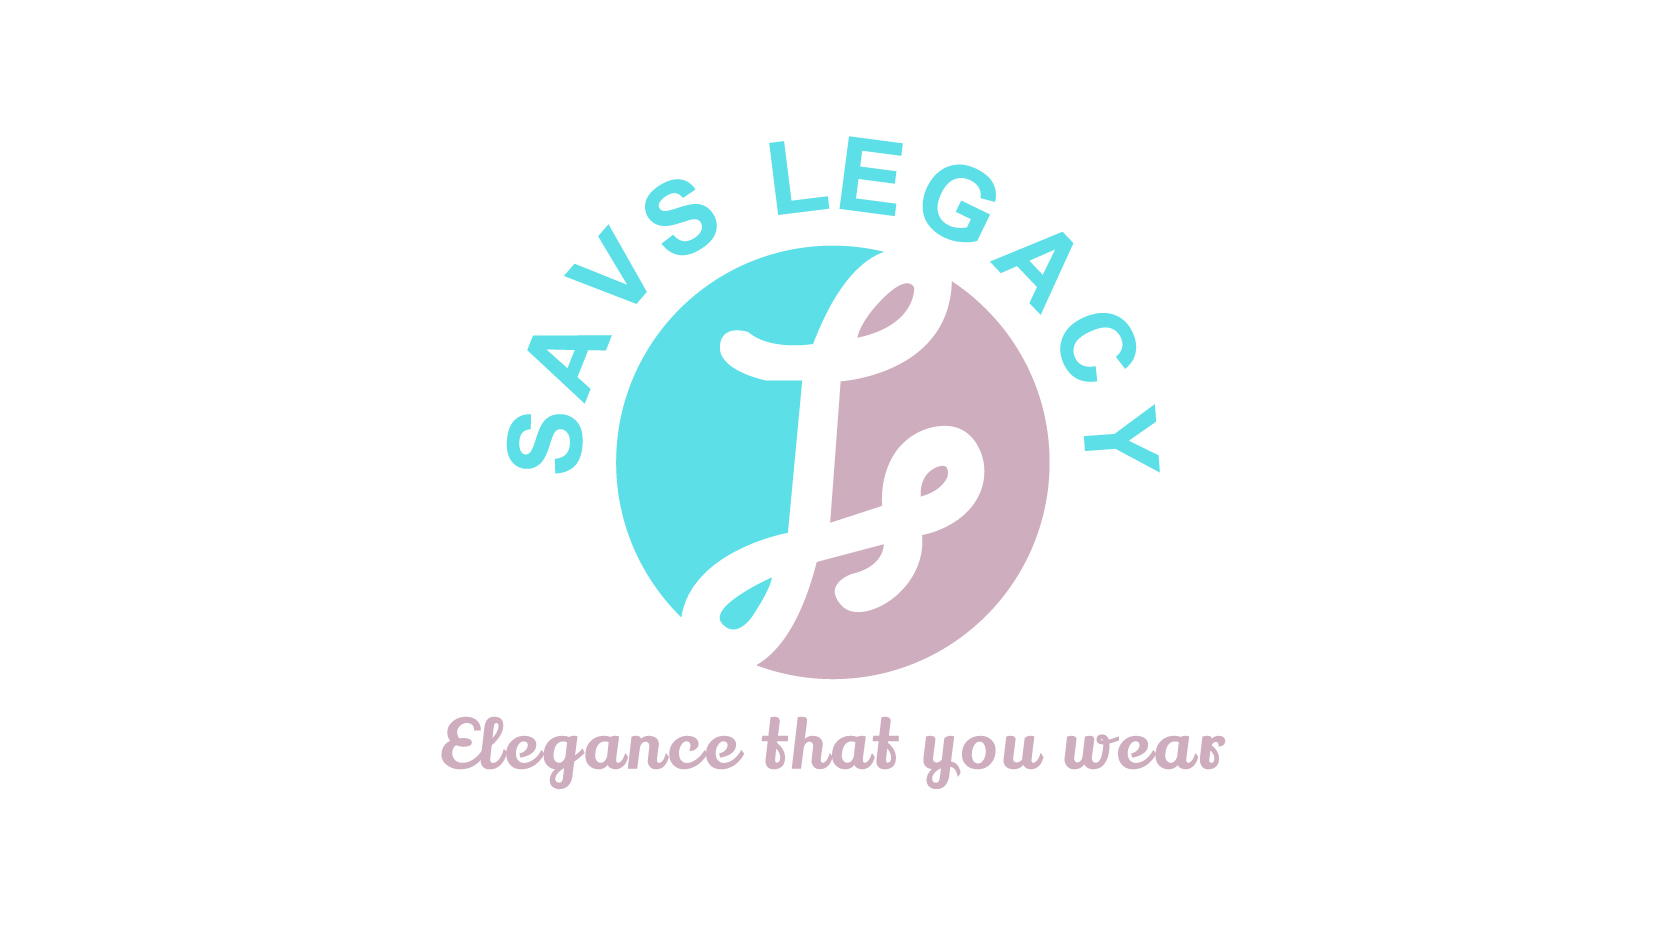 Savs Legacy